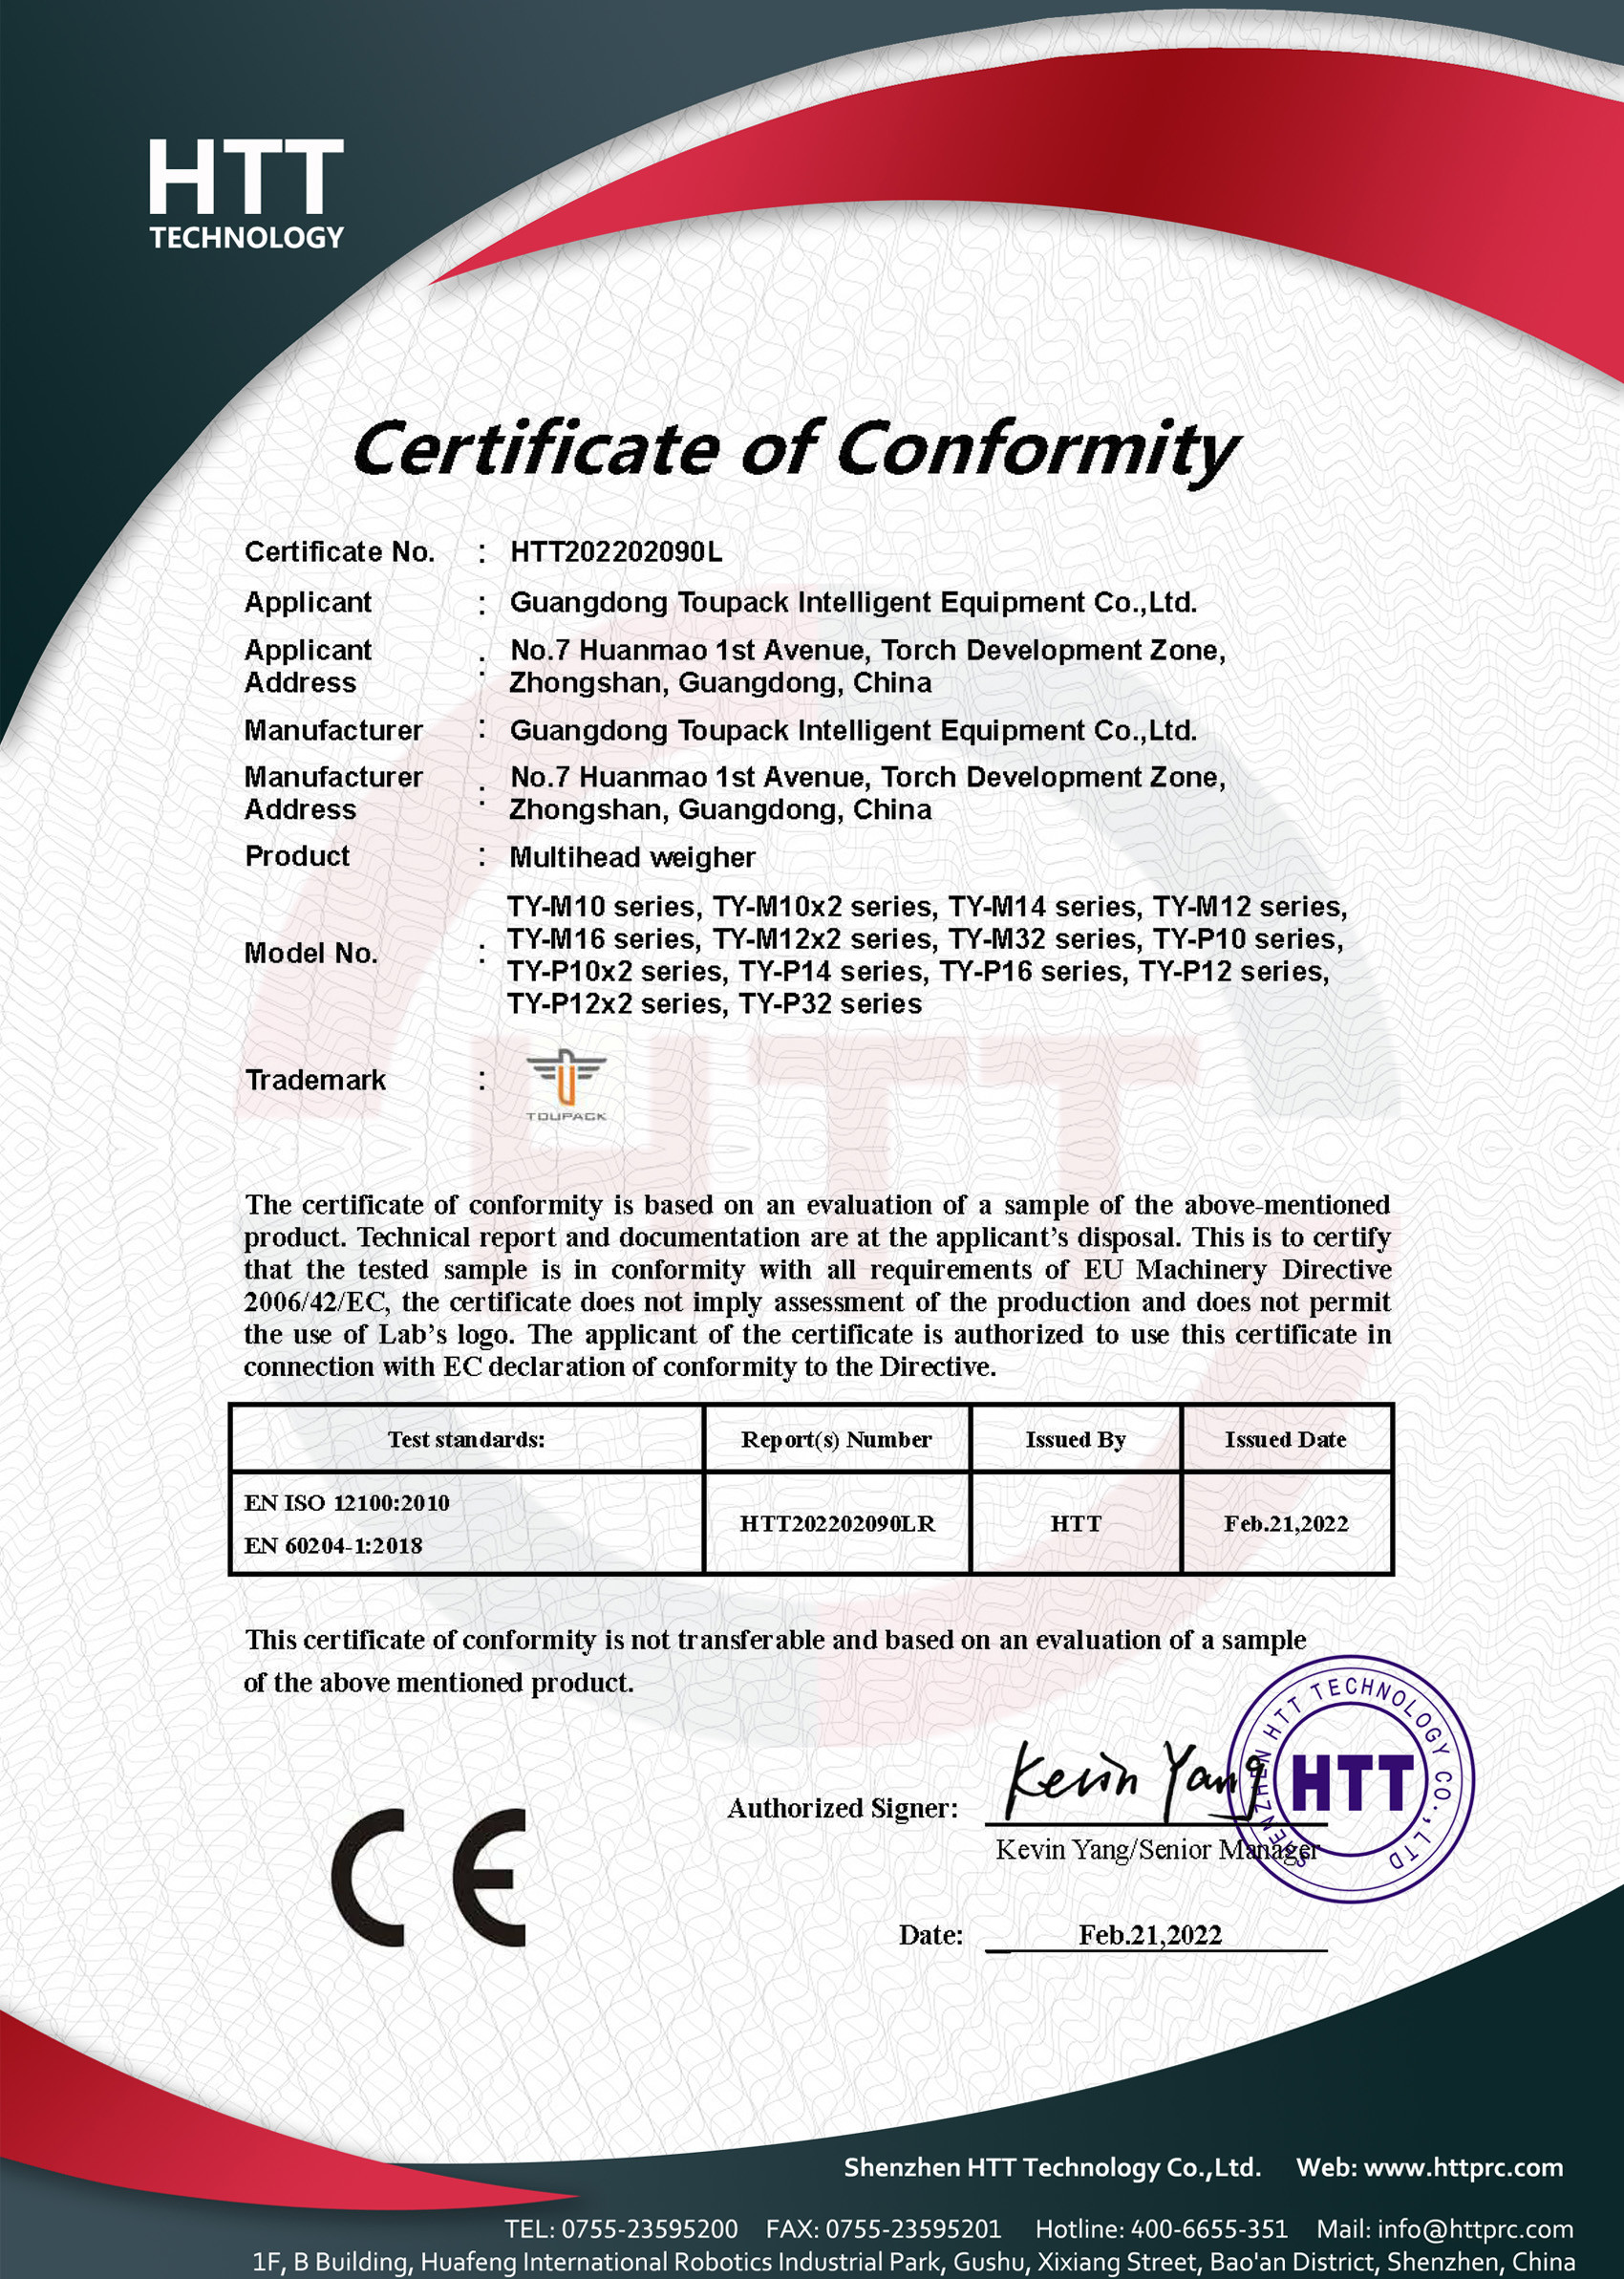 GUANGDONG TOUPACK INTELLIGENT EQUIPMENT CO., LTD Certifications